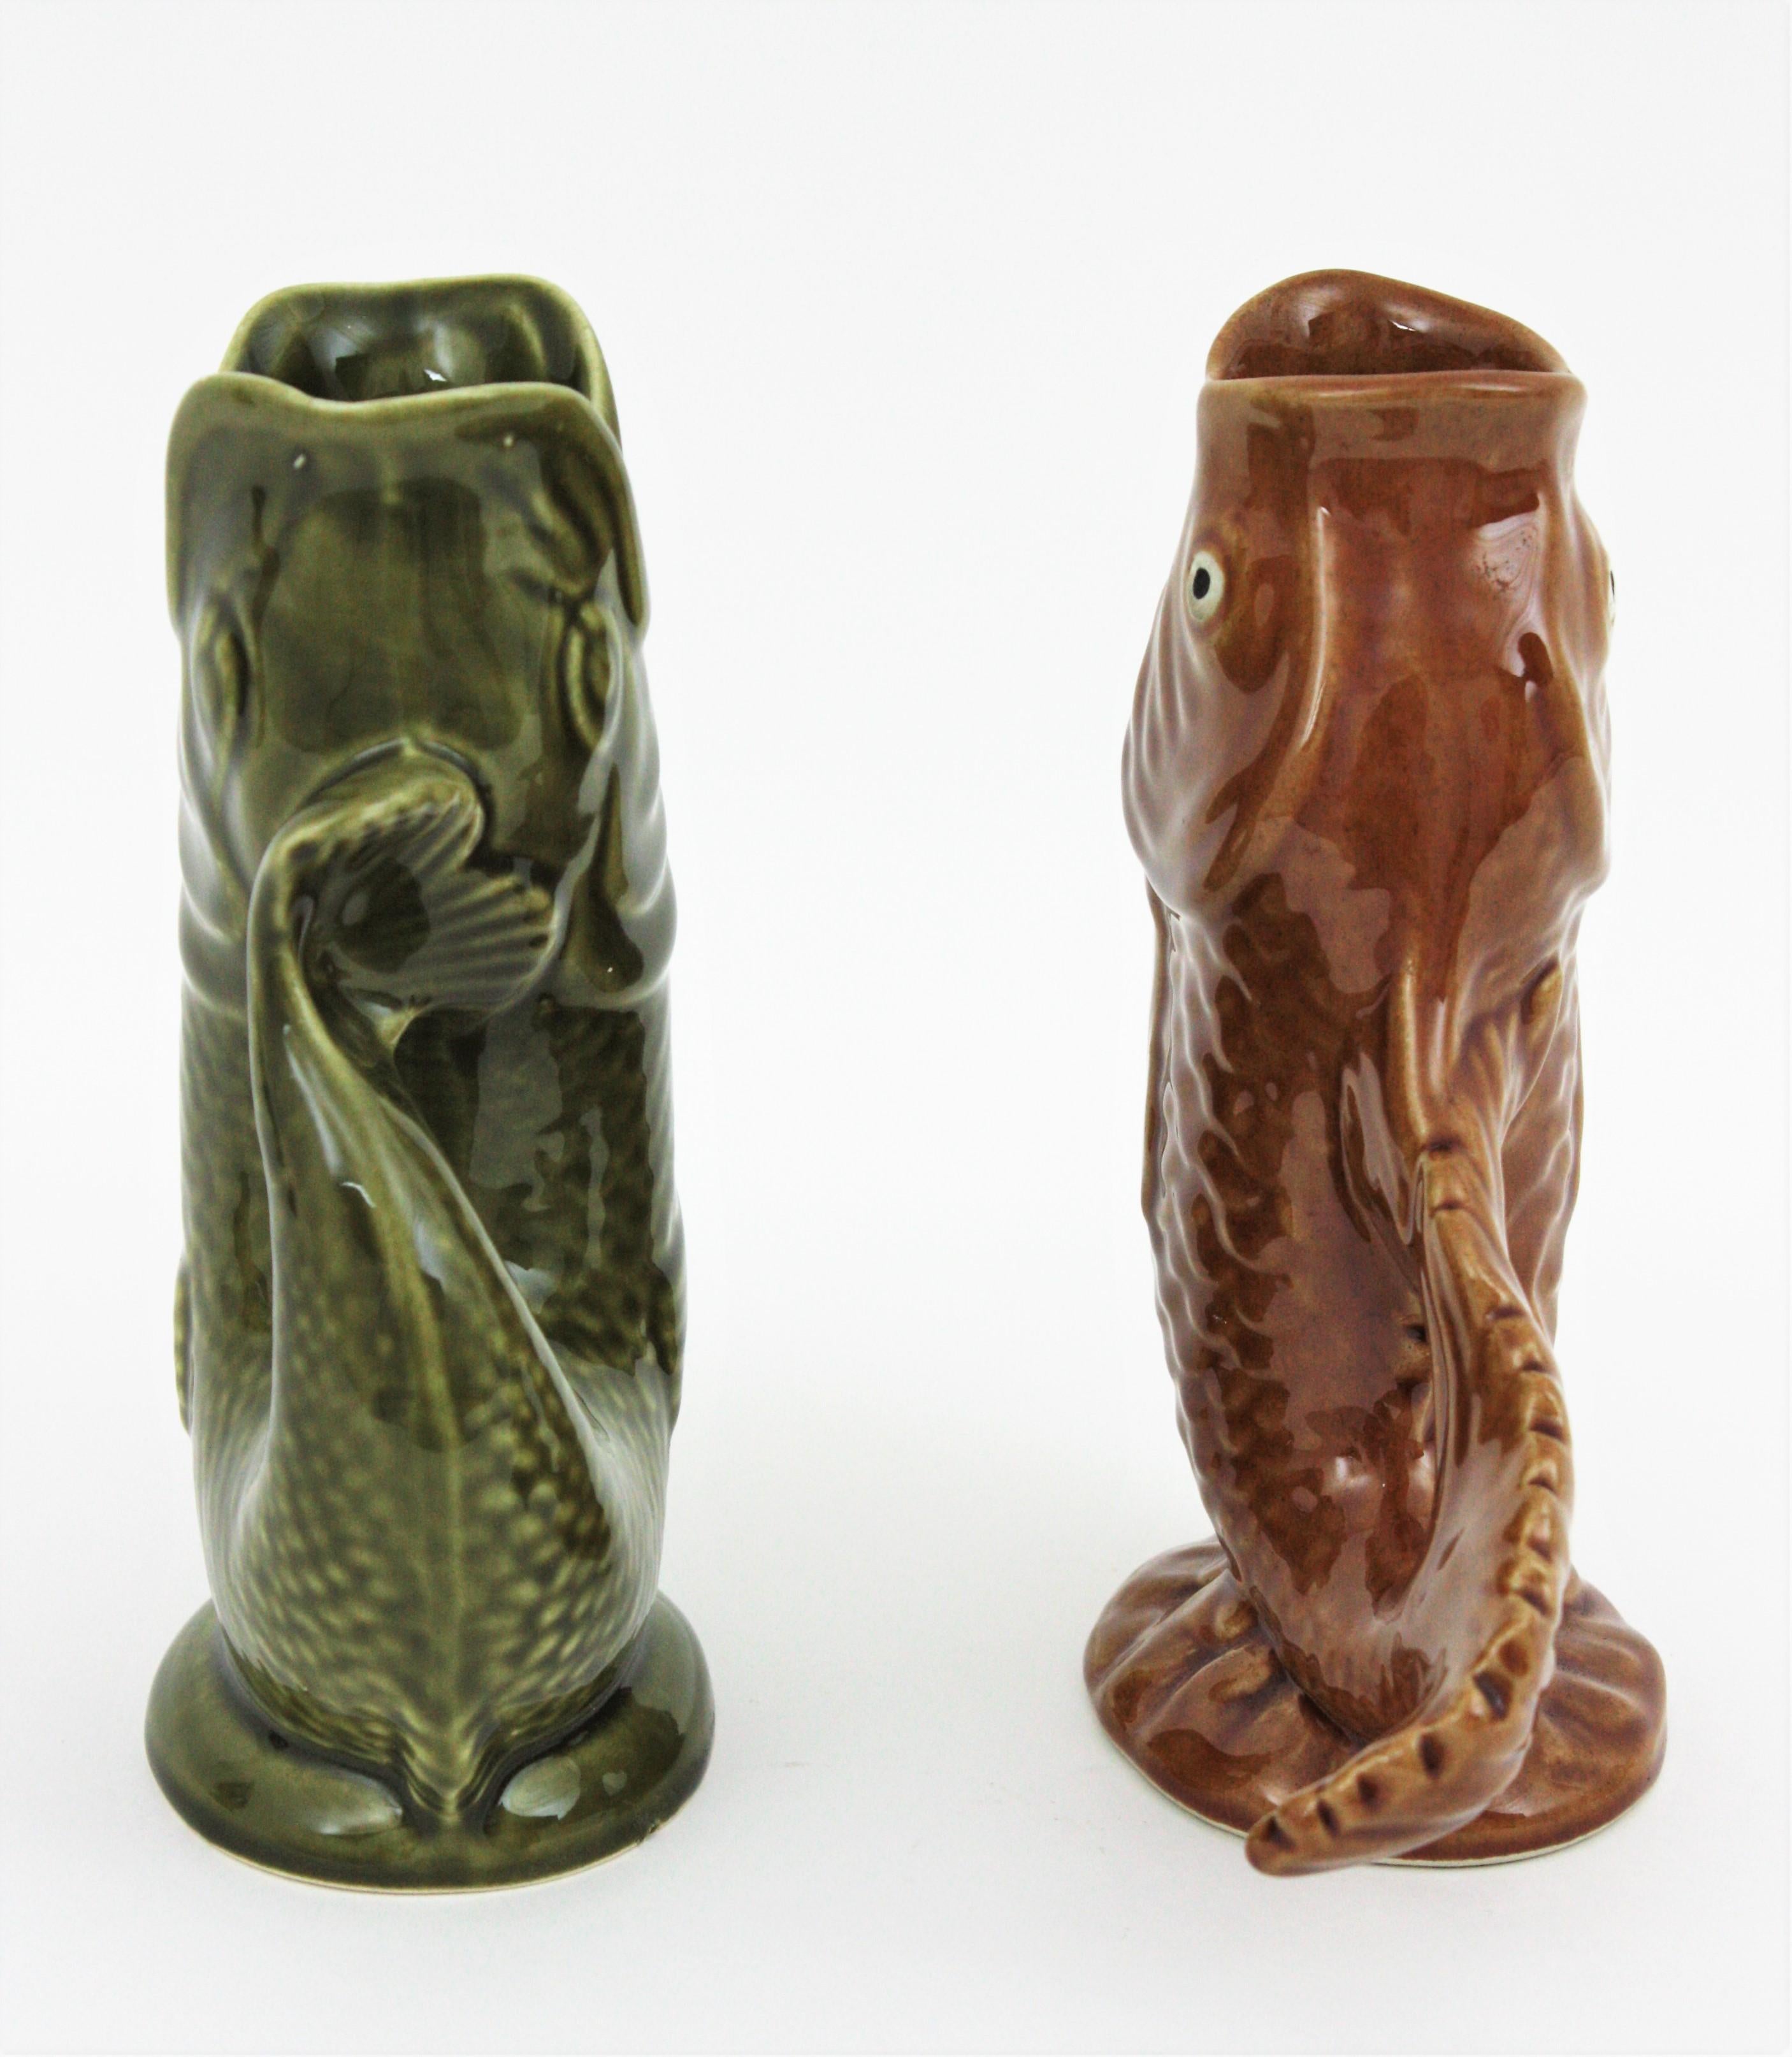 Pair of Mid-Century Modern Glazed Ceramic Gurgle Fish Jugs / Pitchers 1